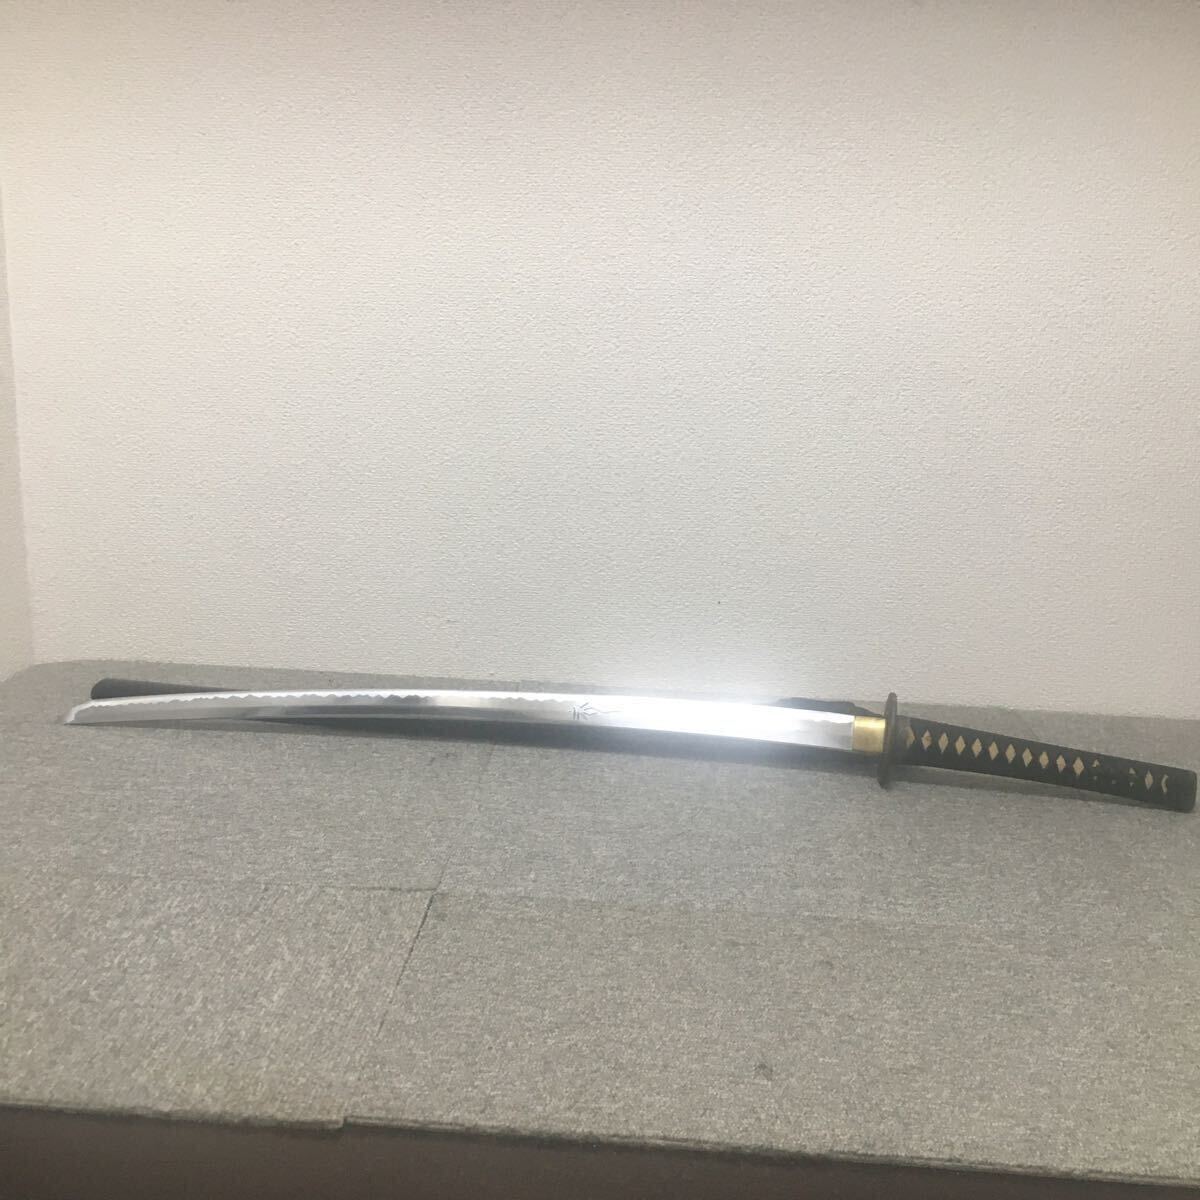  доспехи иммитация меча японский меч коллекция общая длина 100cm лезвие миграция 70cm J-504